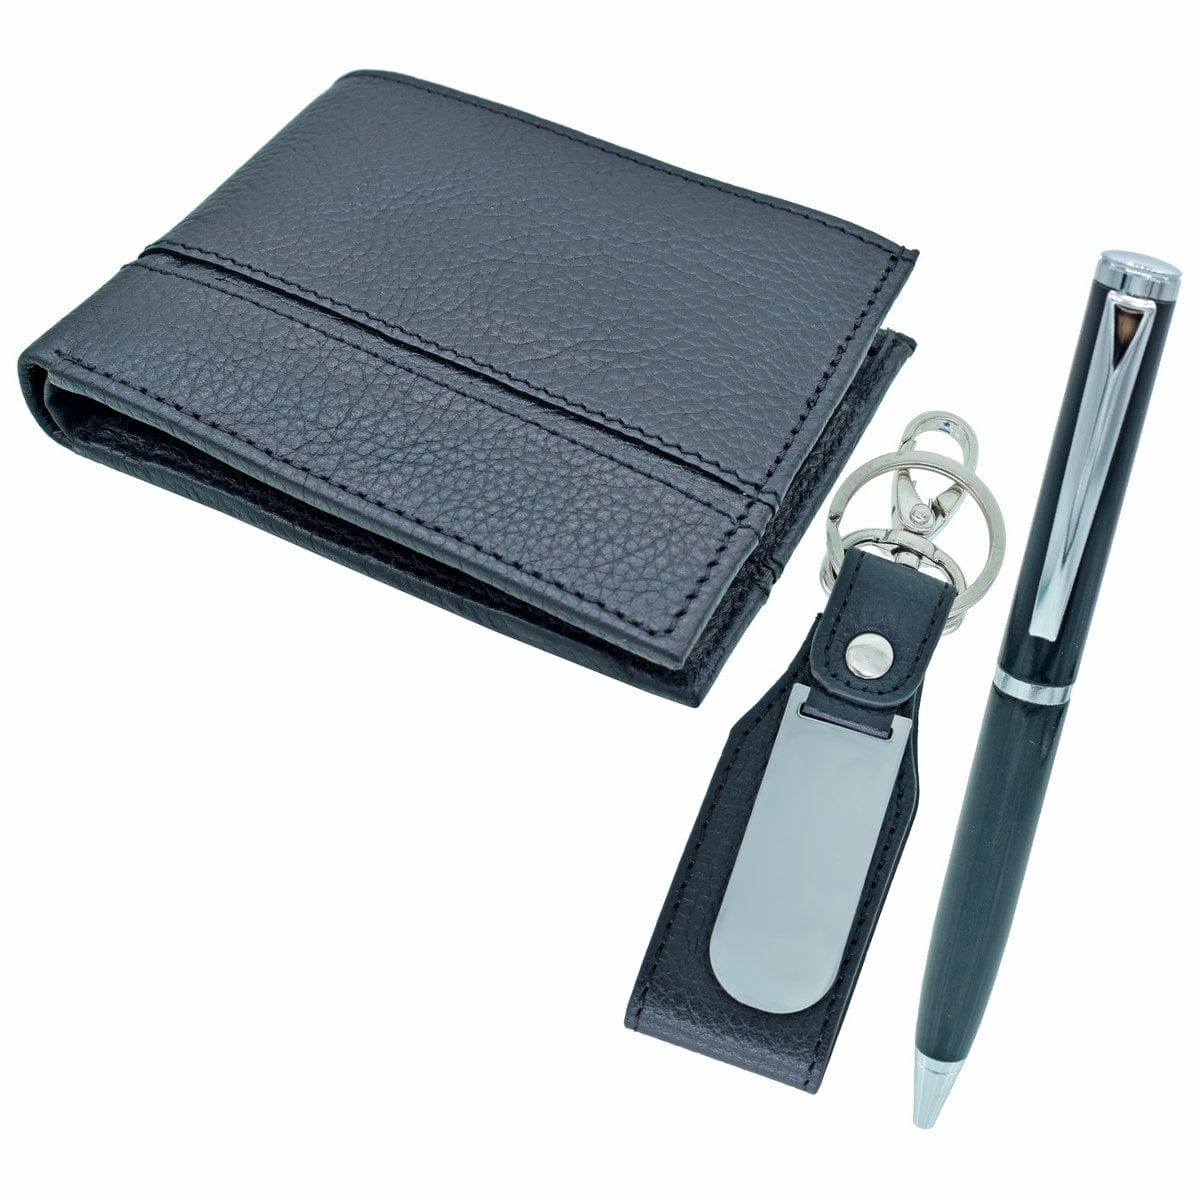 jags-mumbai Pen "Elegant Essentials: 3-in-1 Pen, Keychain, and Gents Wallet Gift Set"